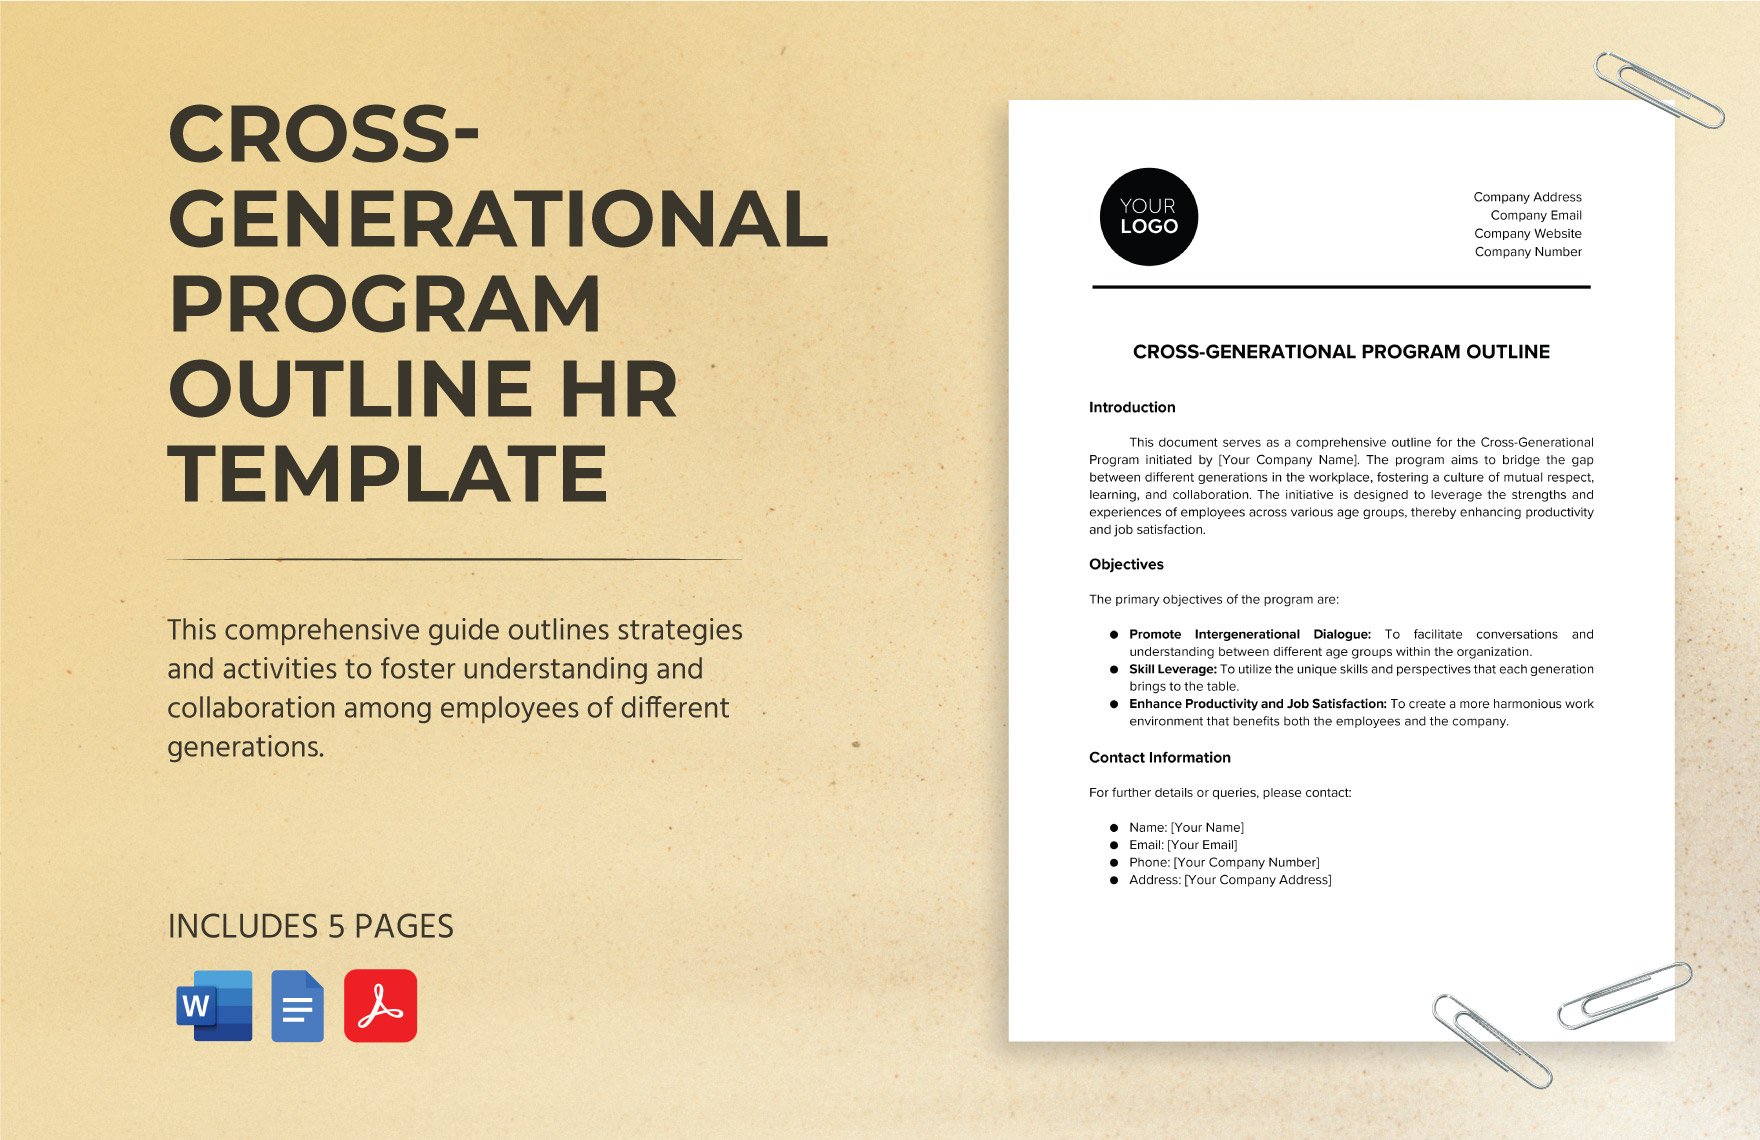 Cross-Generational Program Outline HR Template in Word, Google Docs, PDF